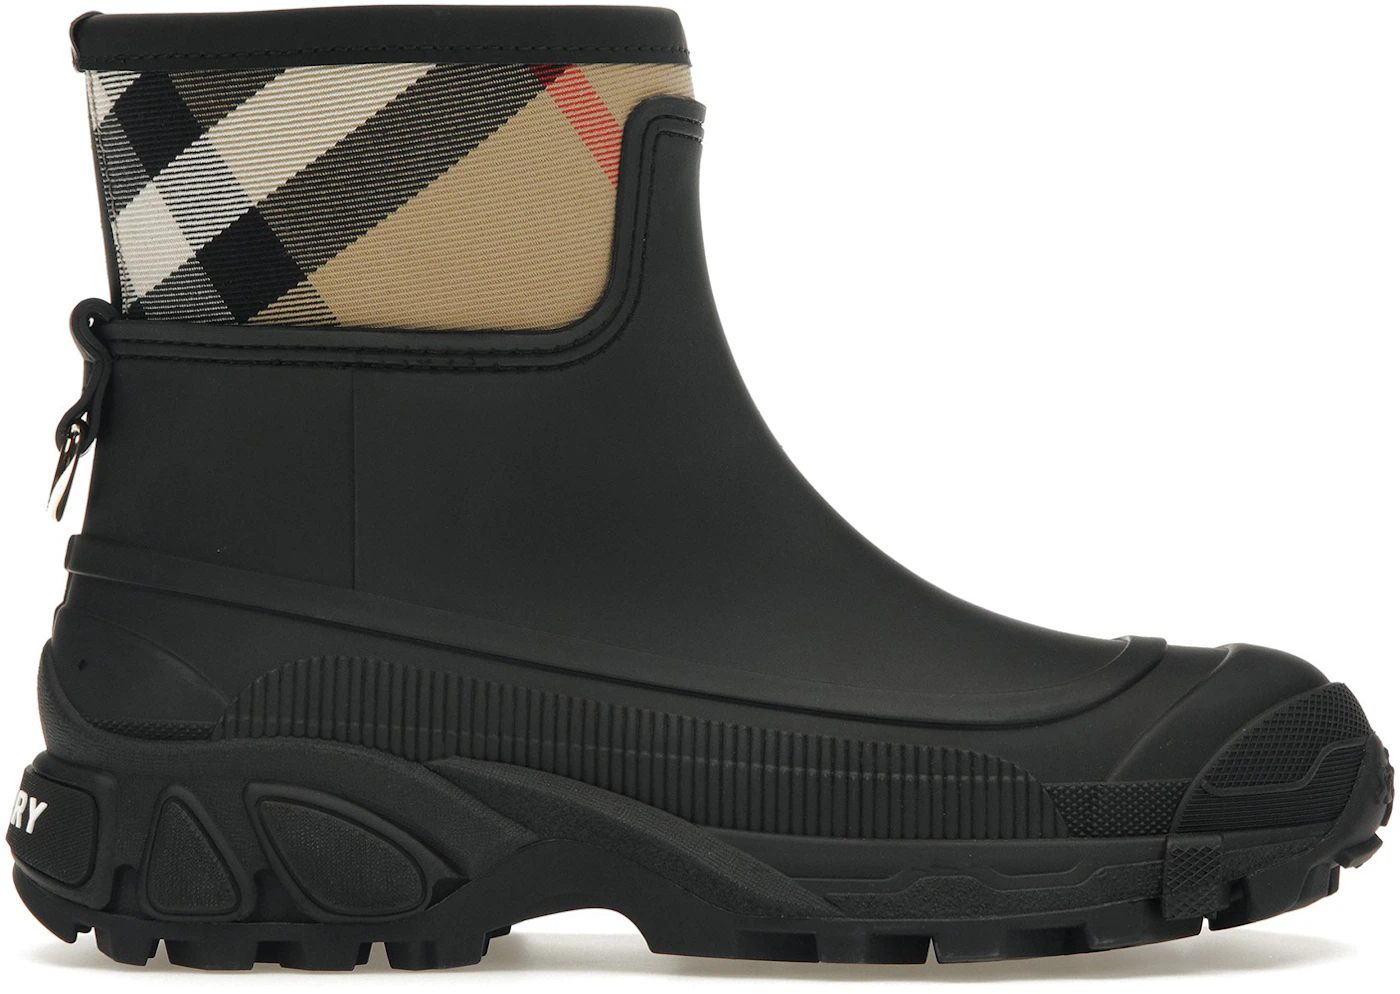 Burberry Ryan Ankle Boot Black (Women's) - 8041949 - US